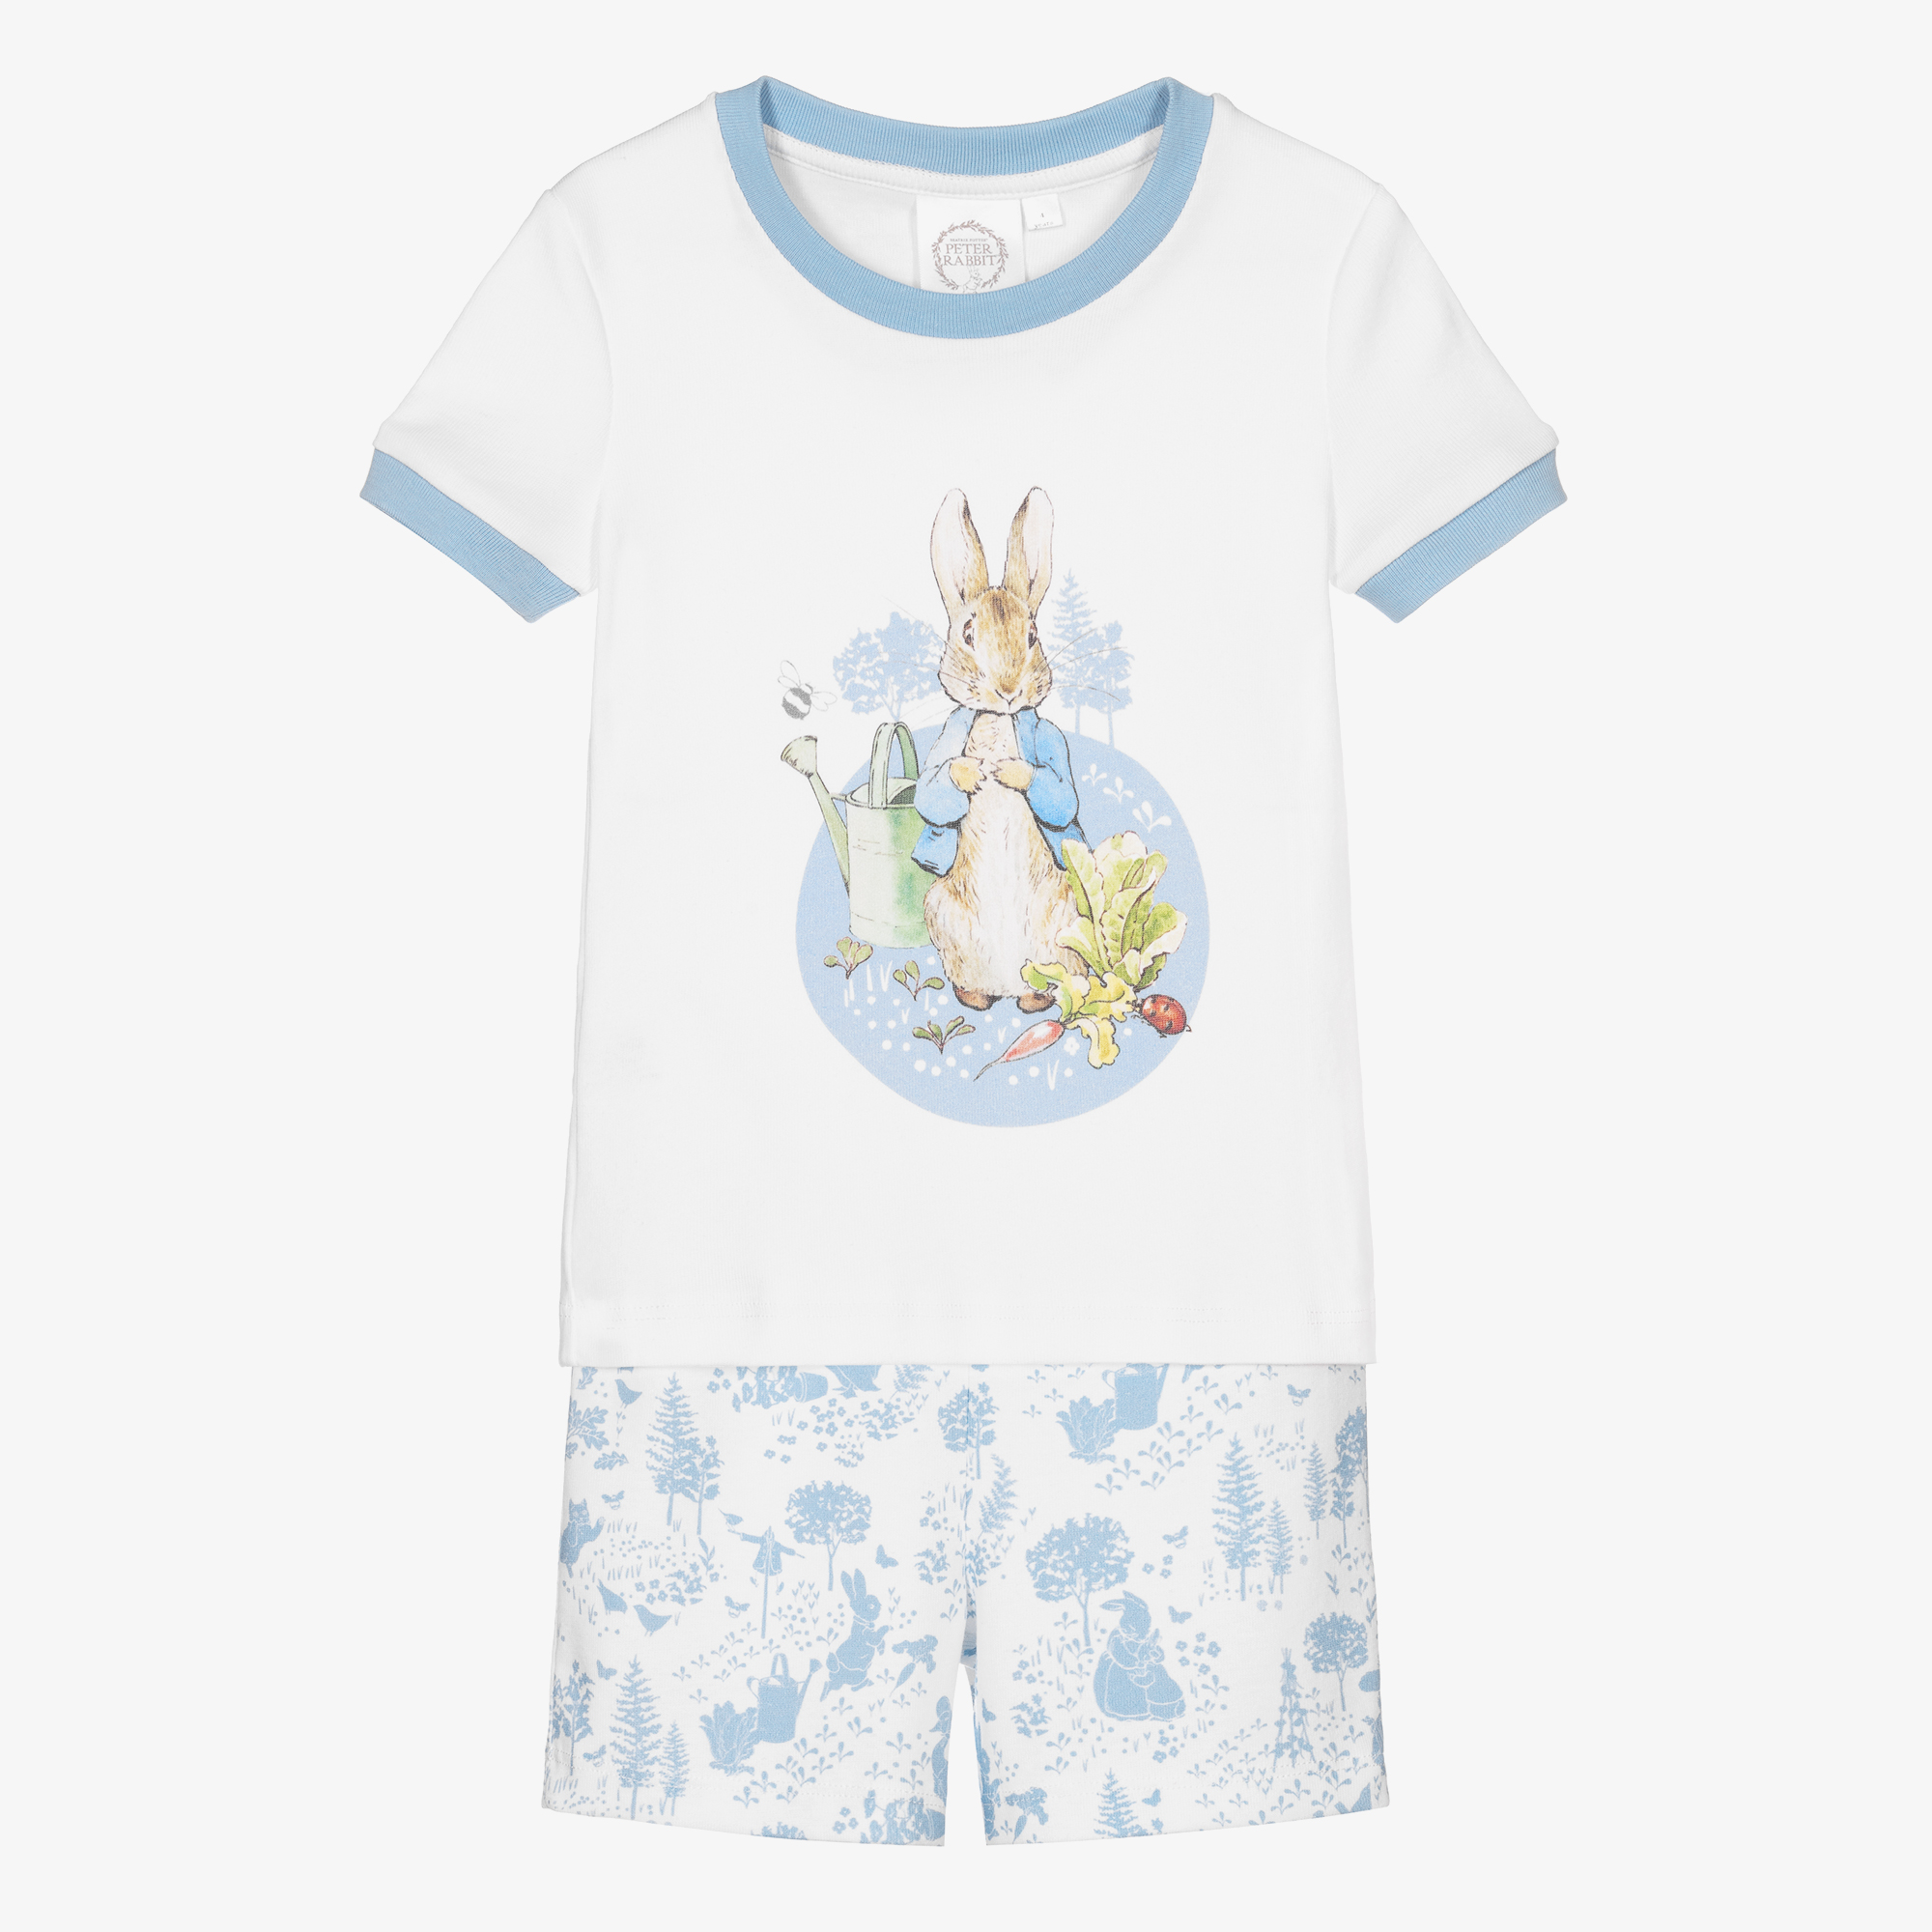 Peter Rabbit™ by Childrensalon - Girls Pink Cotton Pyjamas | Childrensalon